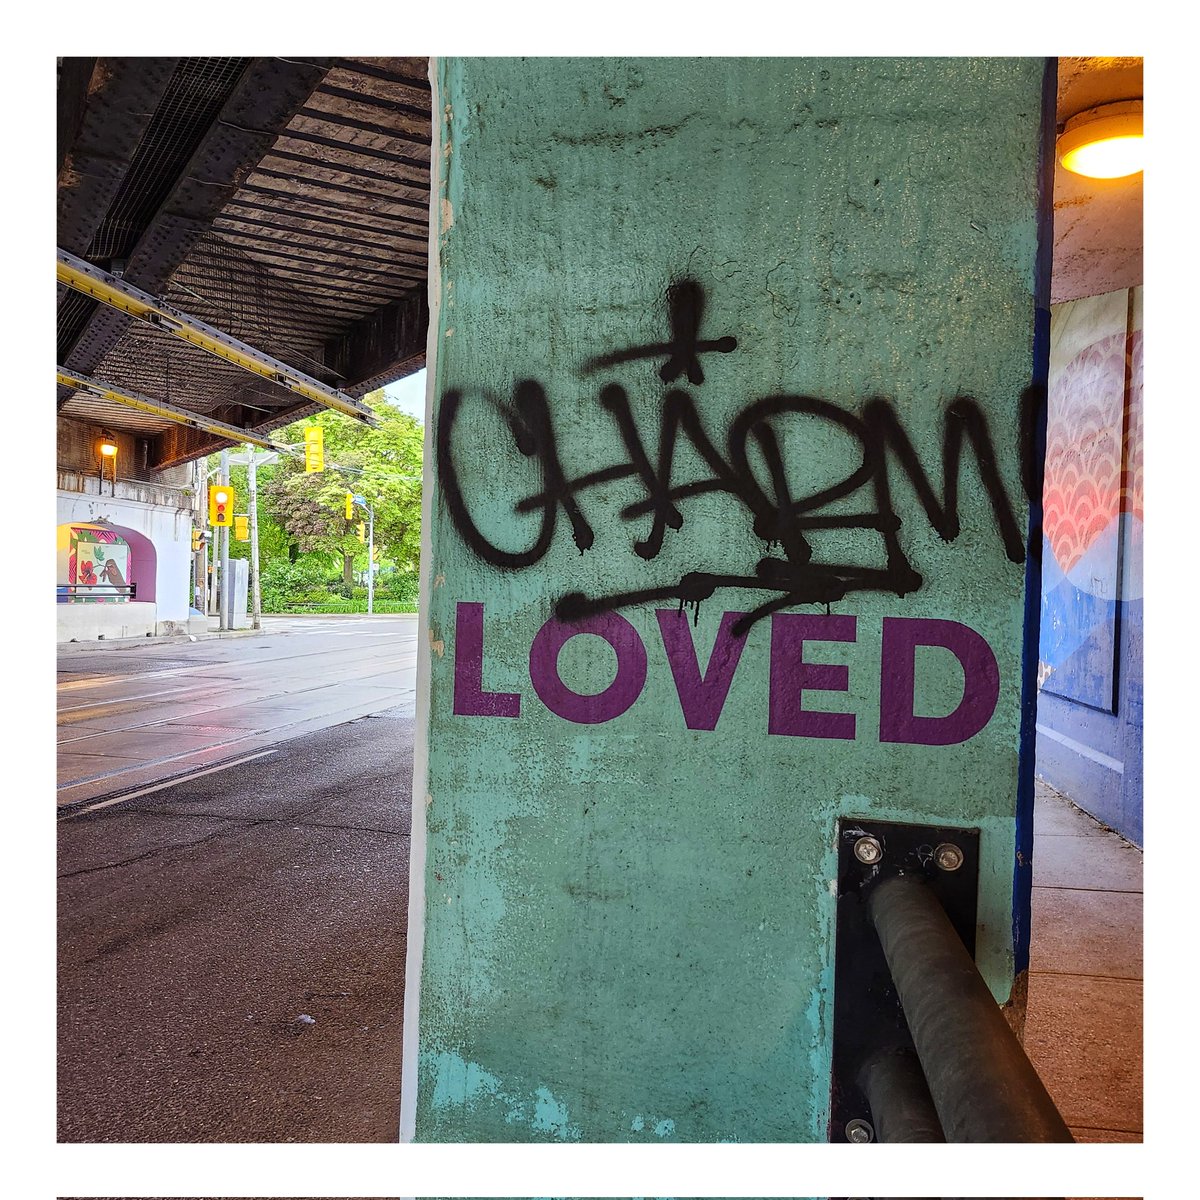 Loved, yet defaced. #Toronto #Riverdale #GerrardStreetEast #PublicArt #Photography